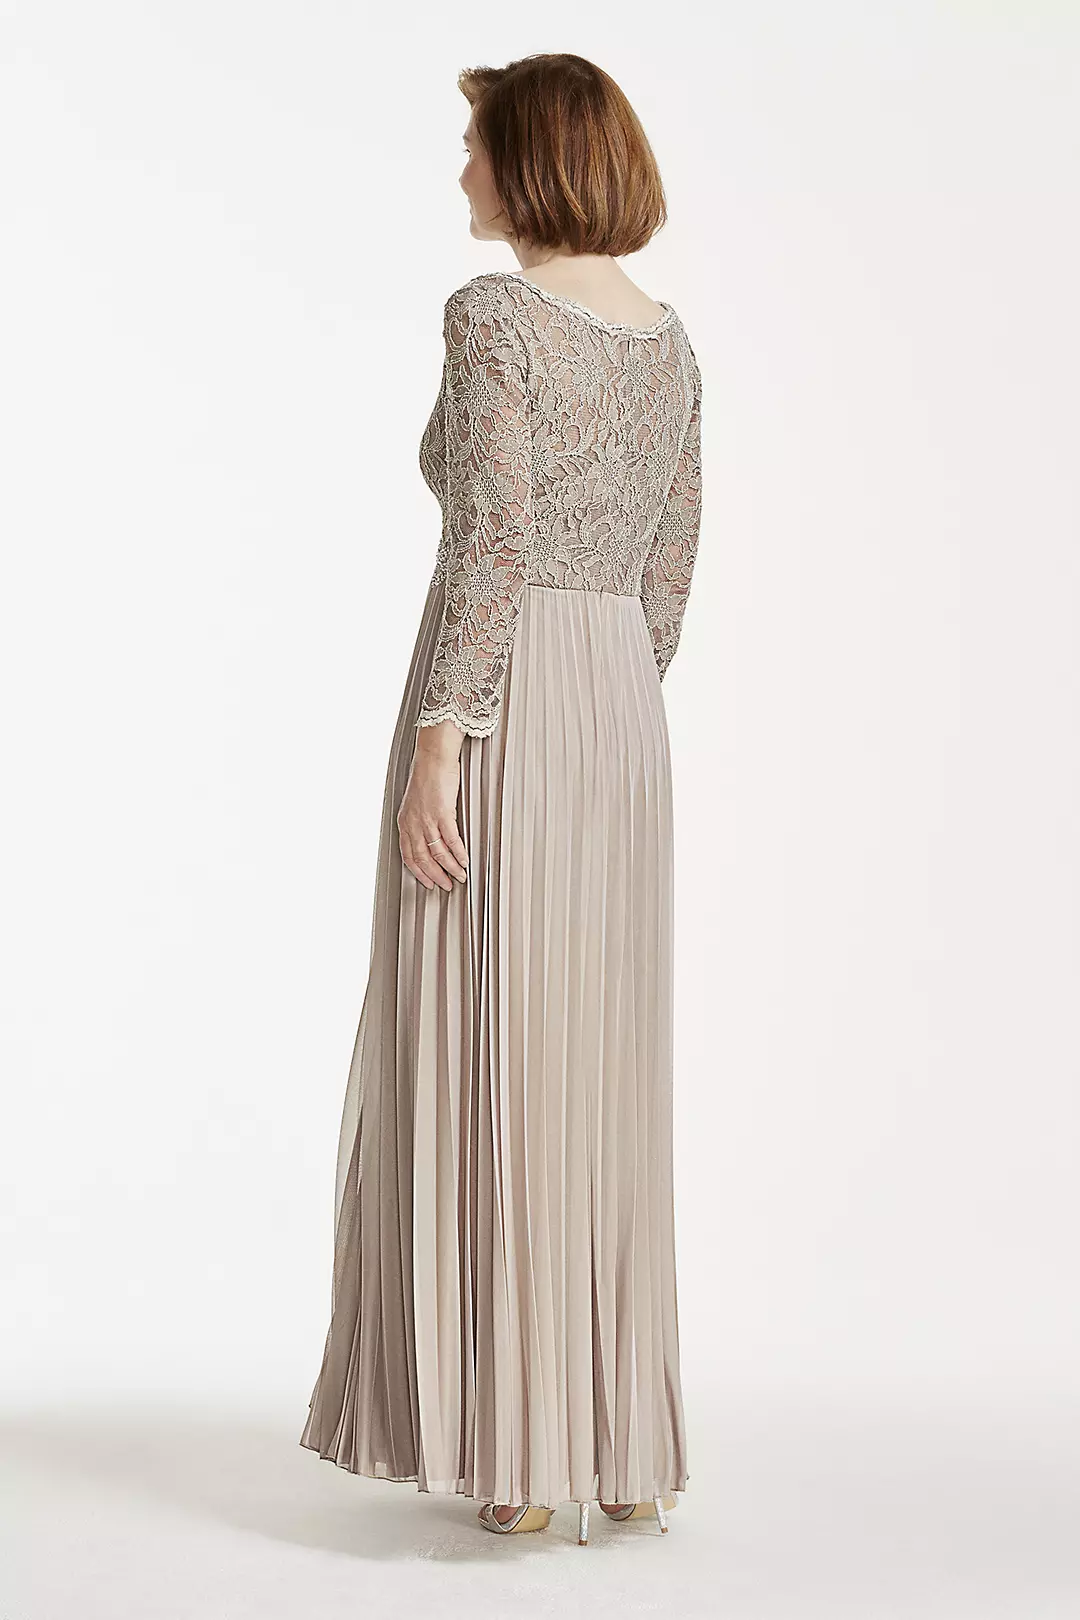 Long Lace and Chiffon Dress with Beaded Waist Image 2